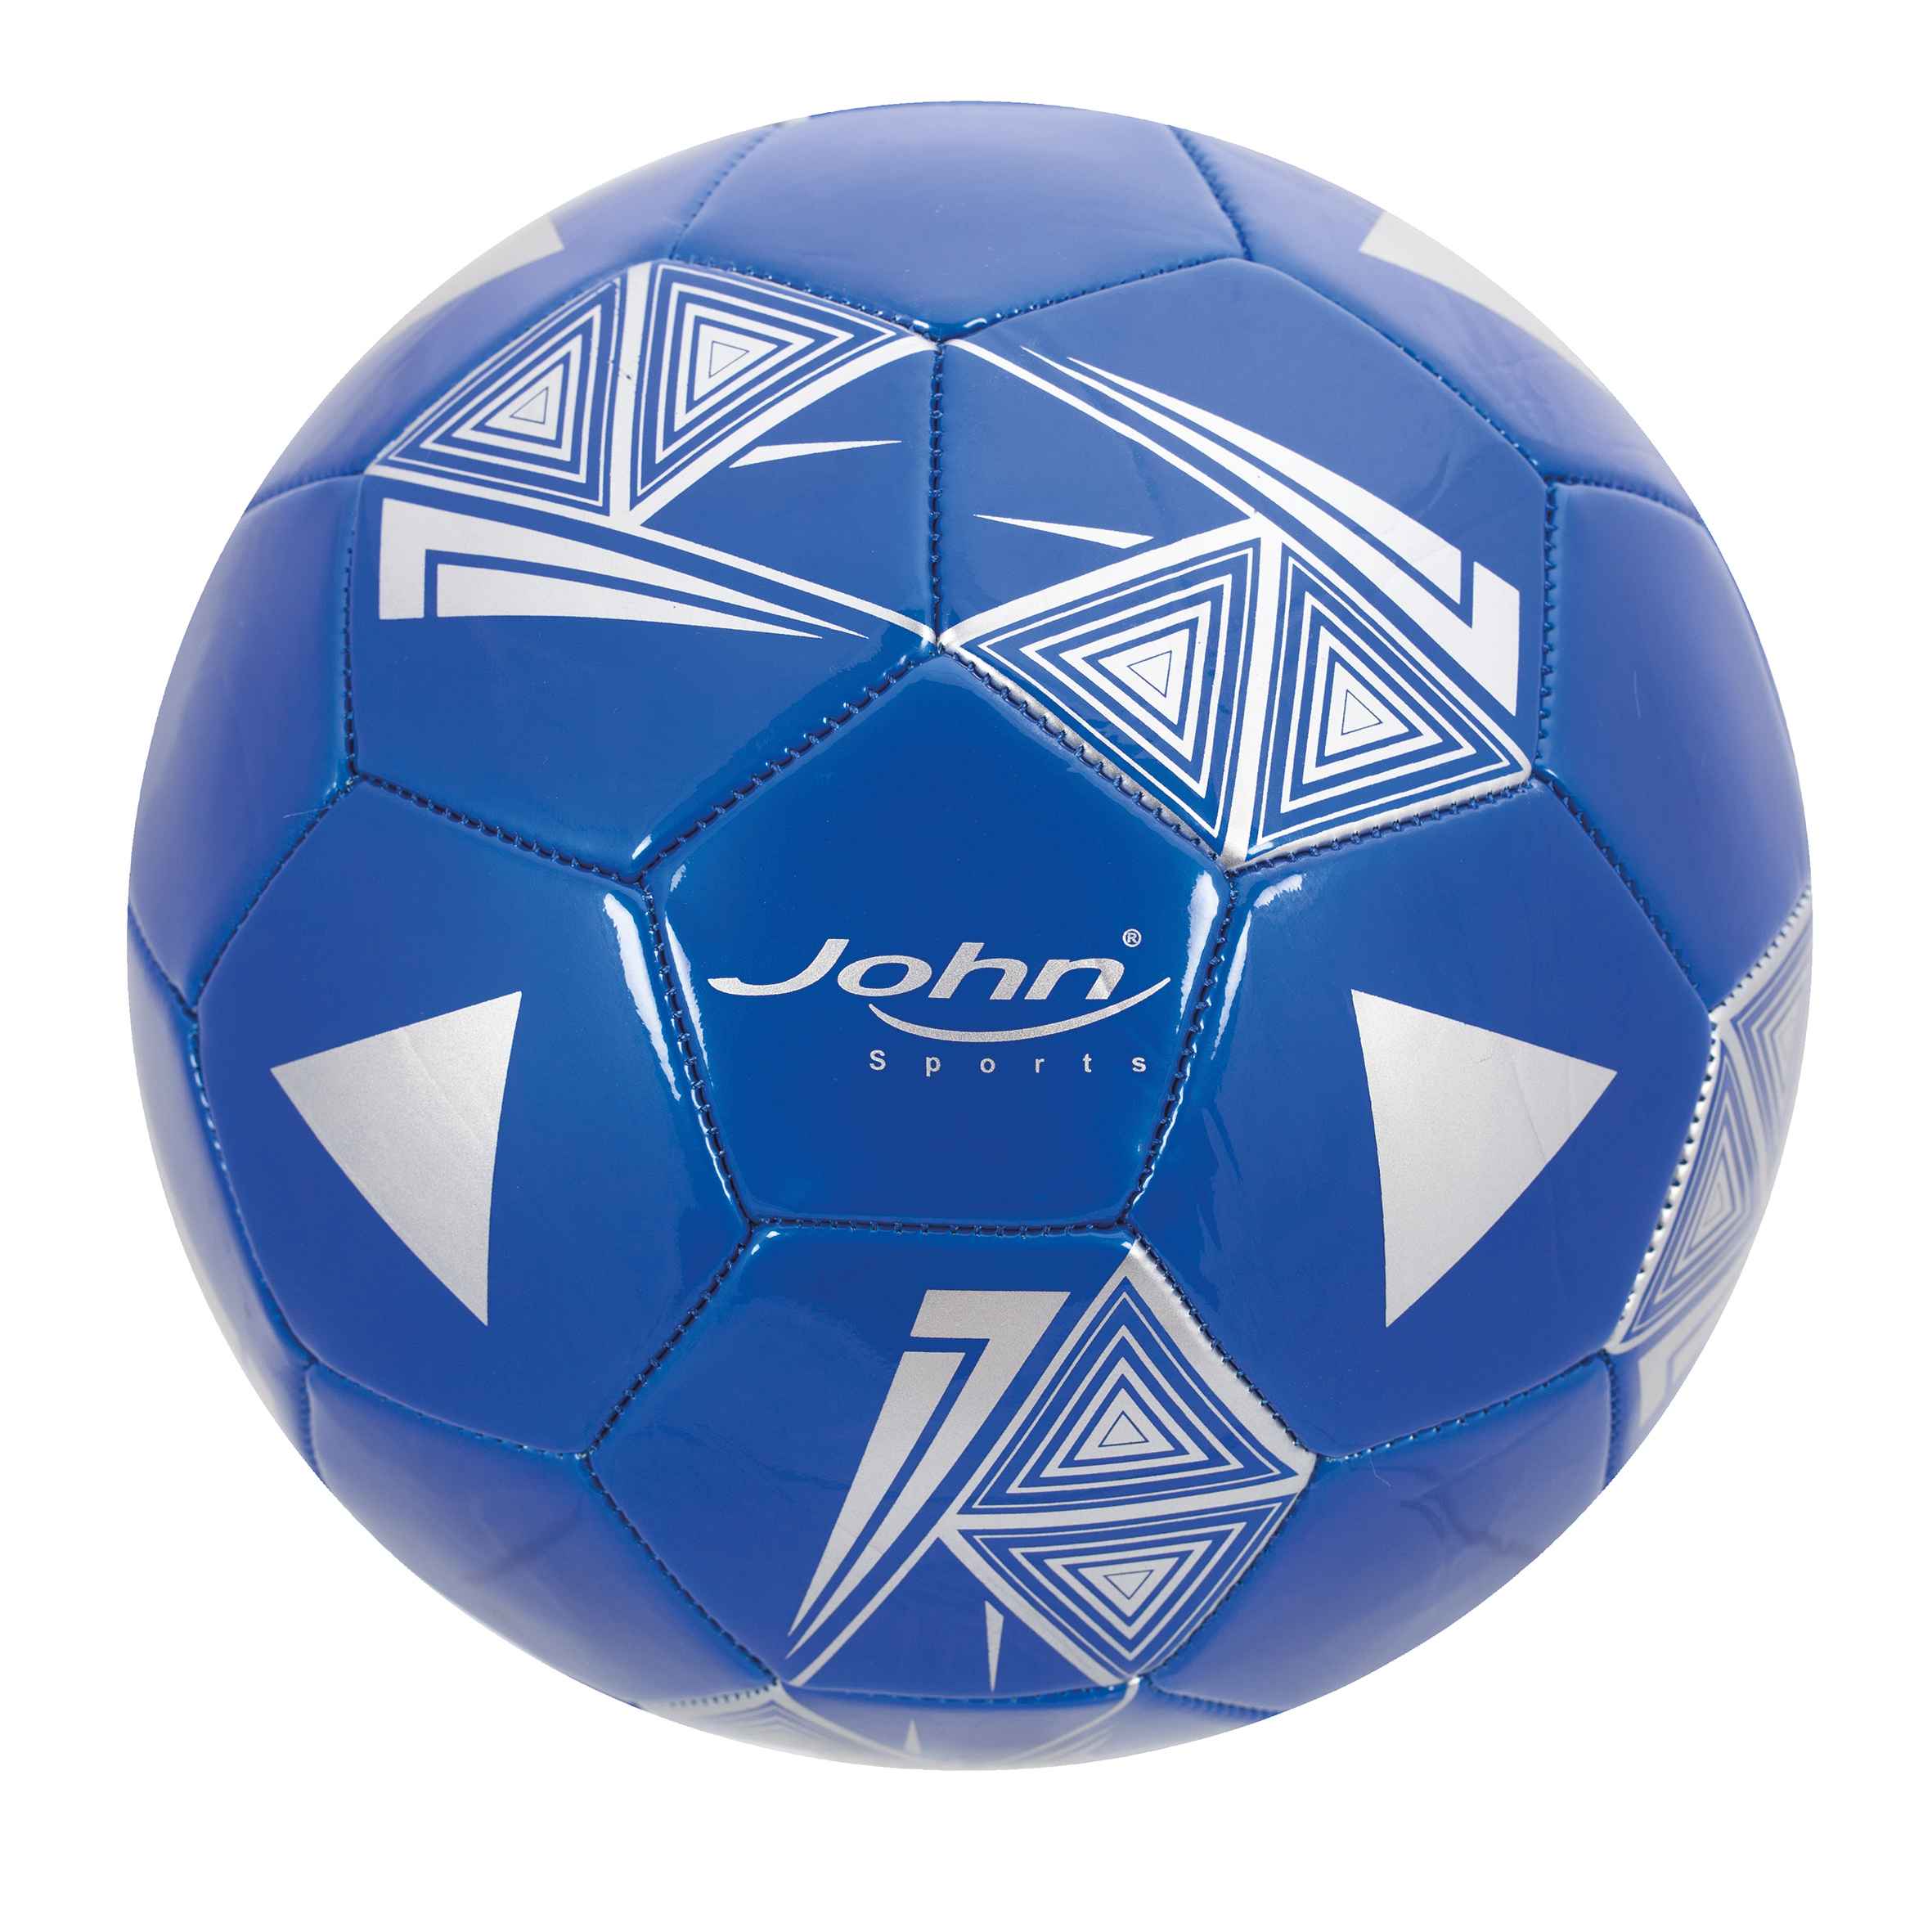 John Μπάλα Ποδοσφαίρου 220mm Classic II Pearl, 3 Χρώματα 52002 - John Hellas